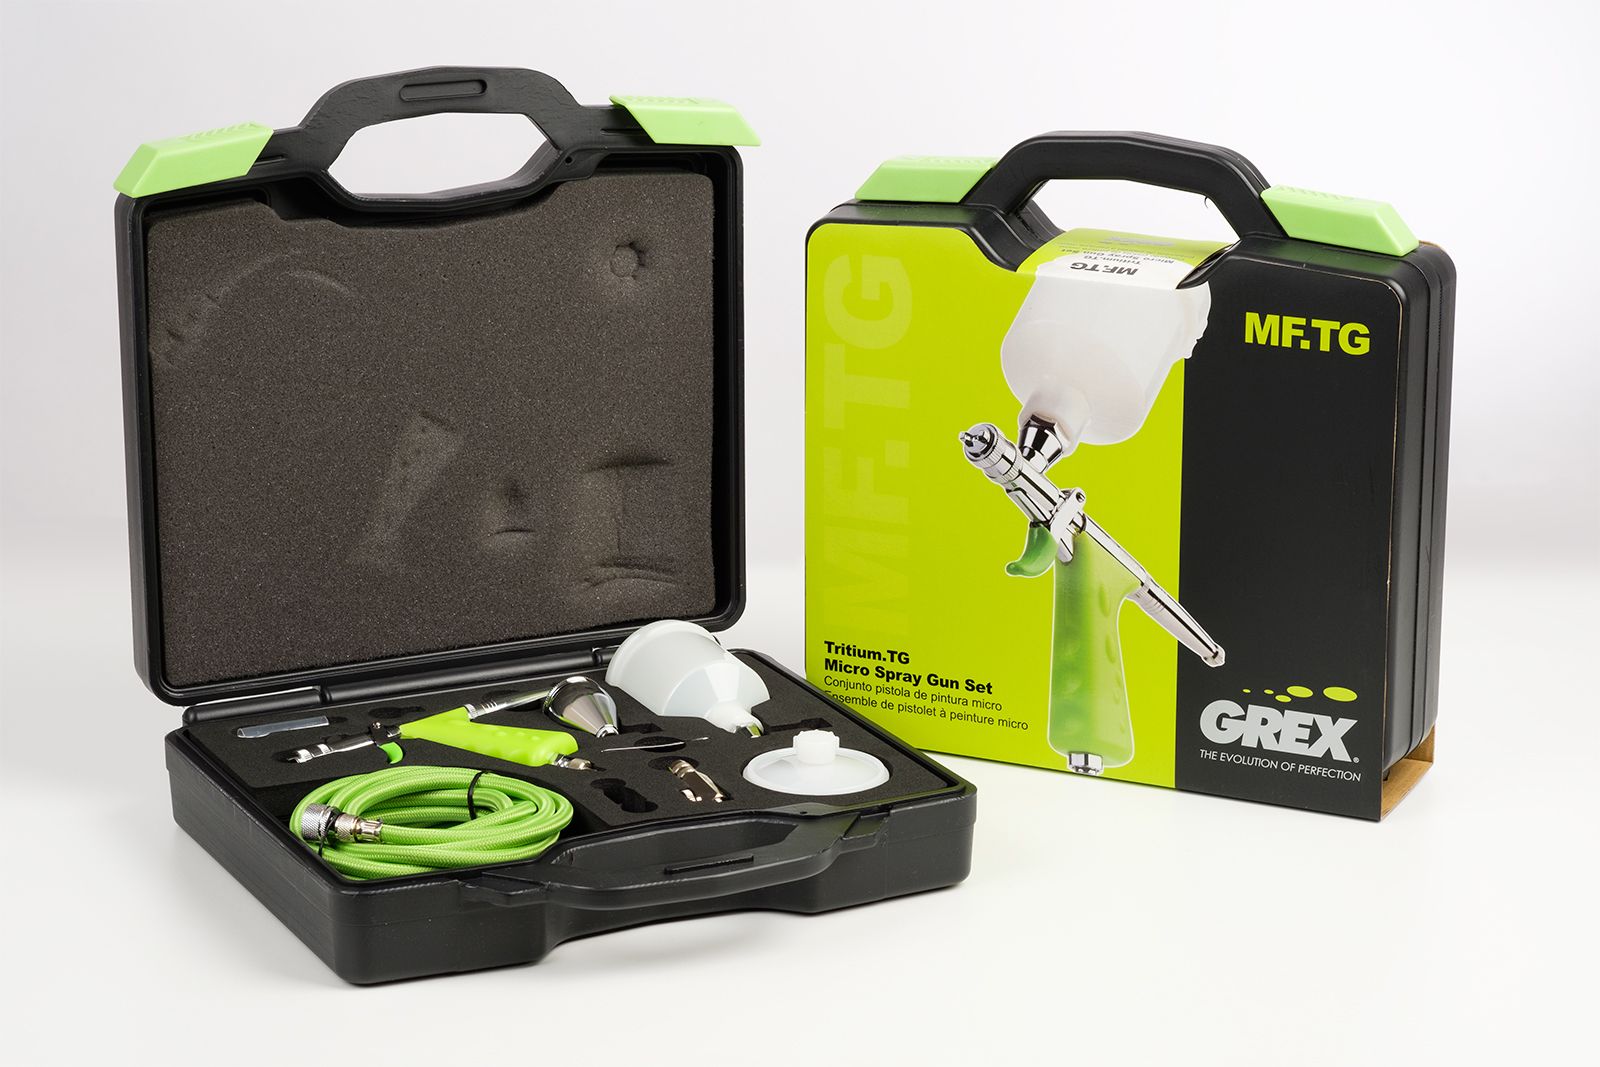 Grex Tritium.TG7 Micro Spray Spray Gun Set 0.7mm - merriartist.com